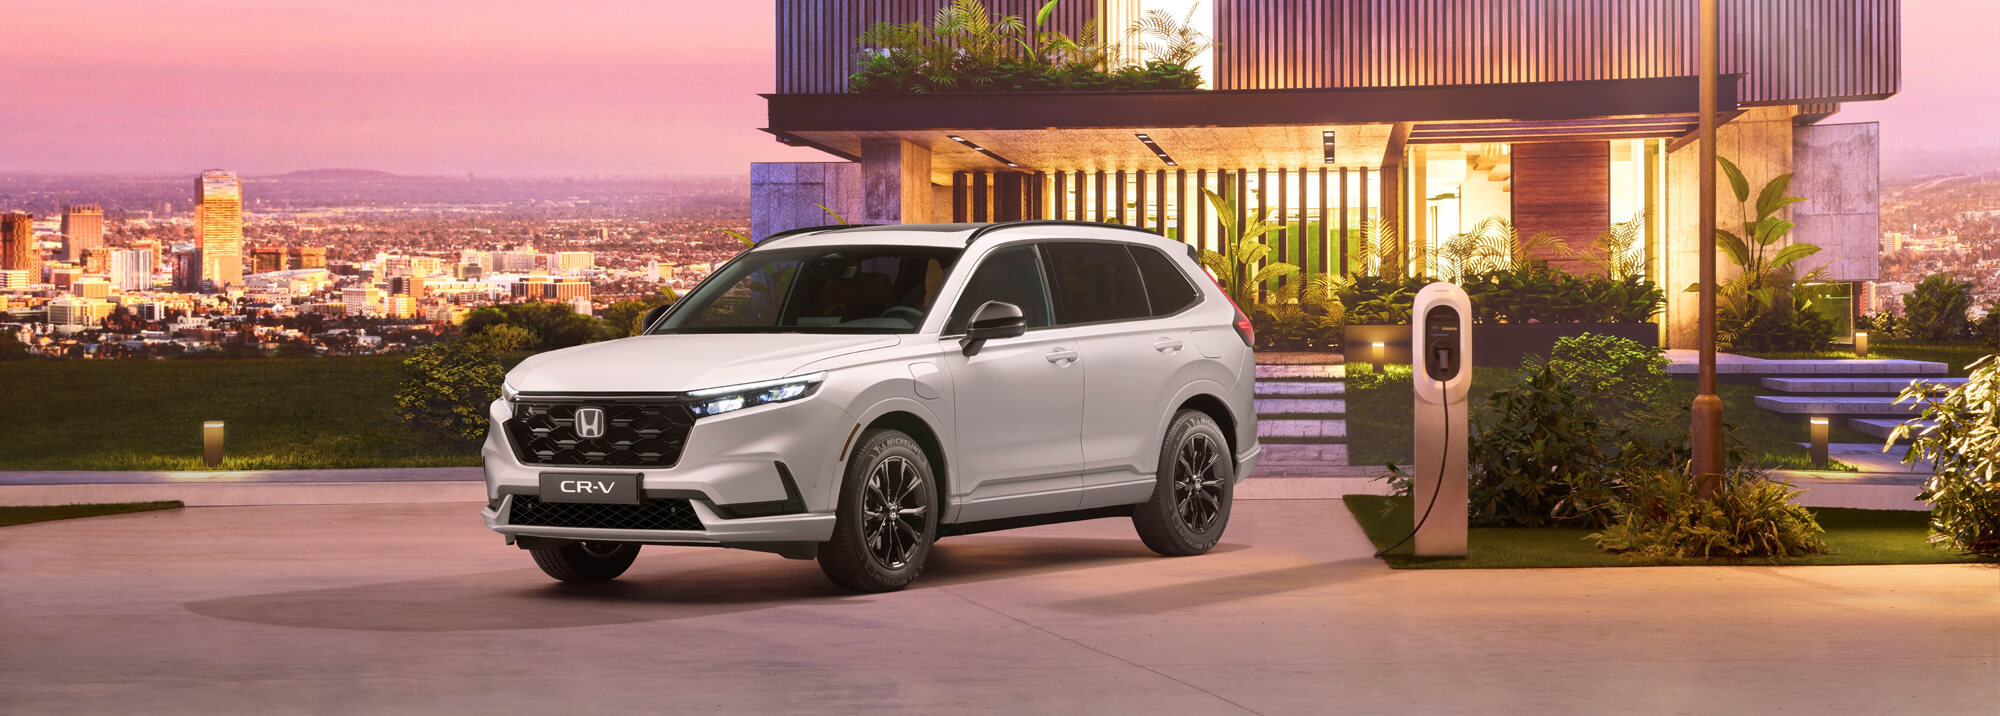 New Honda CR-V receives five-star Euro NCAP rating video-banner